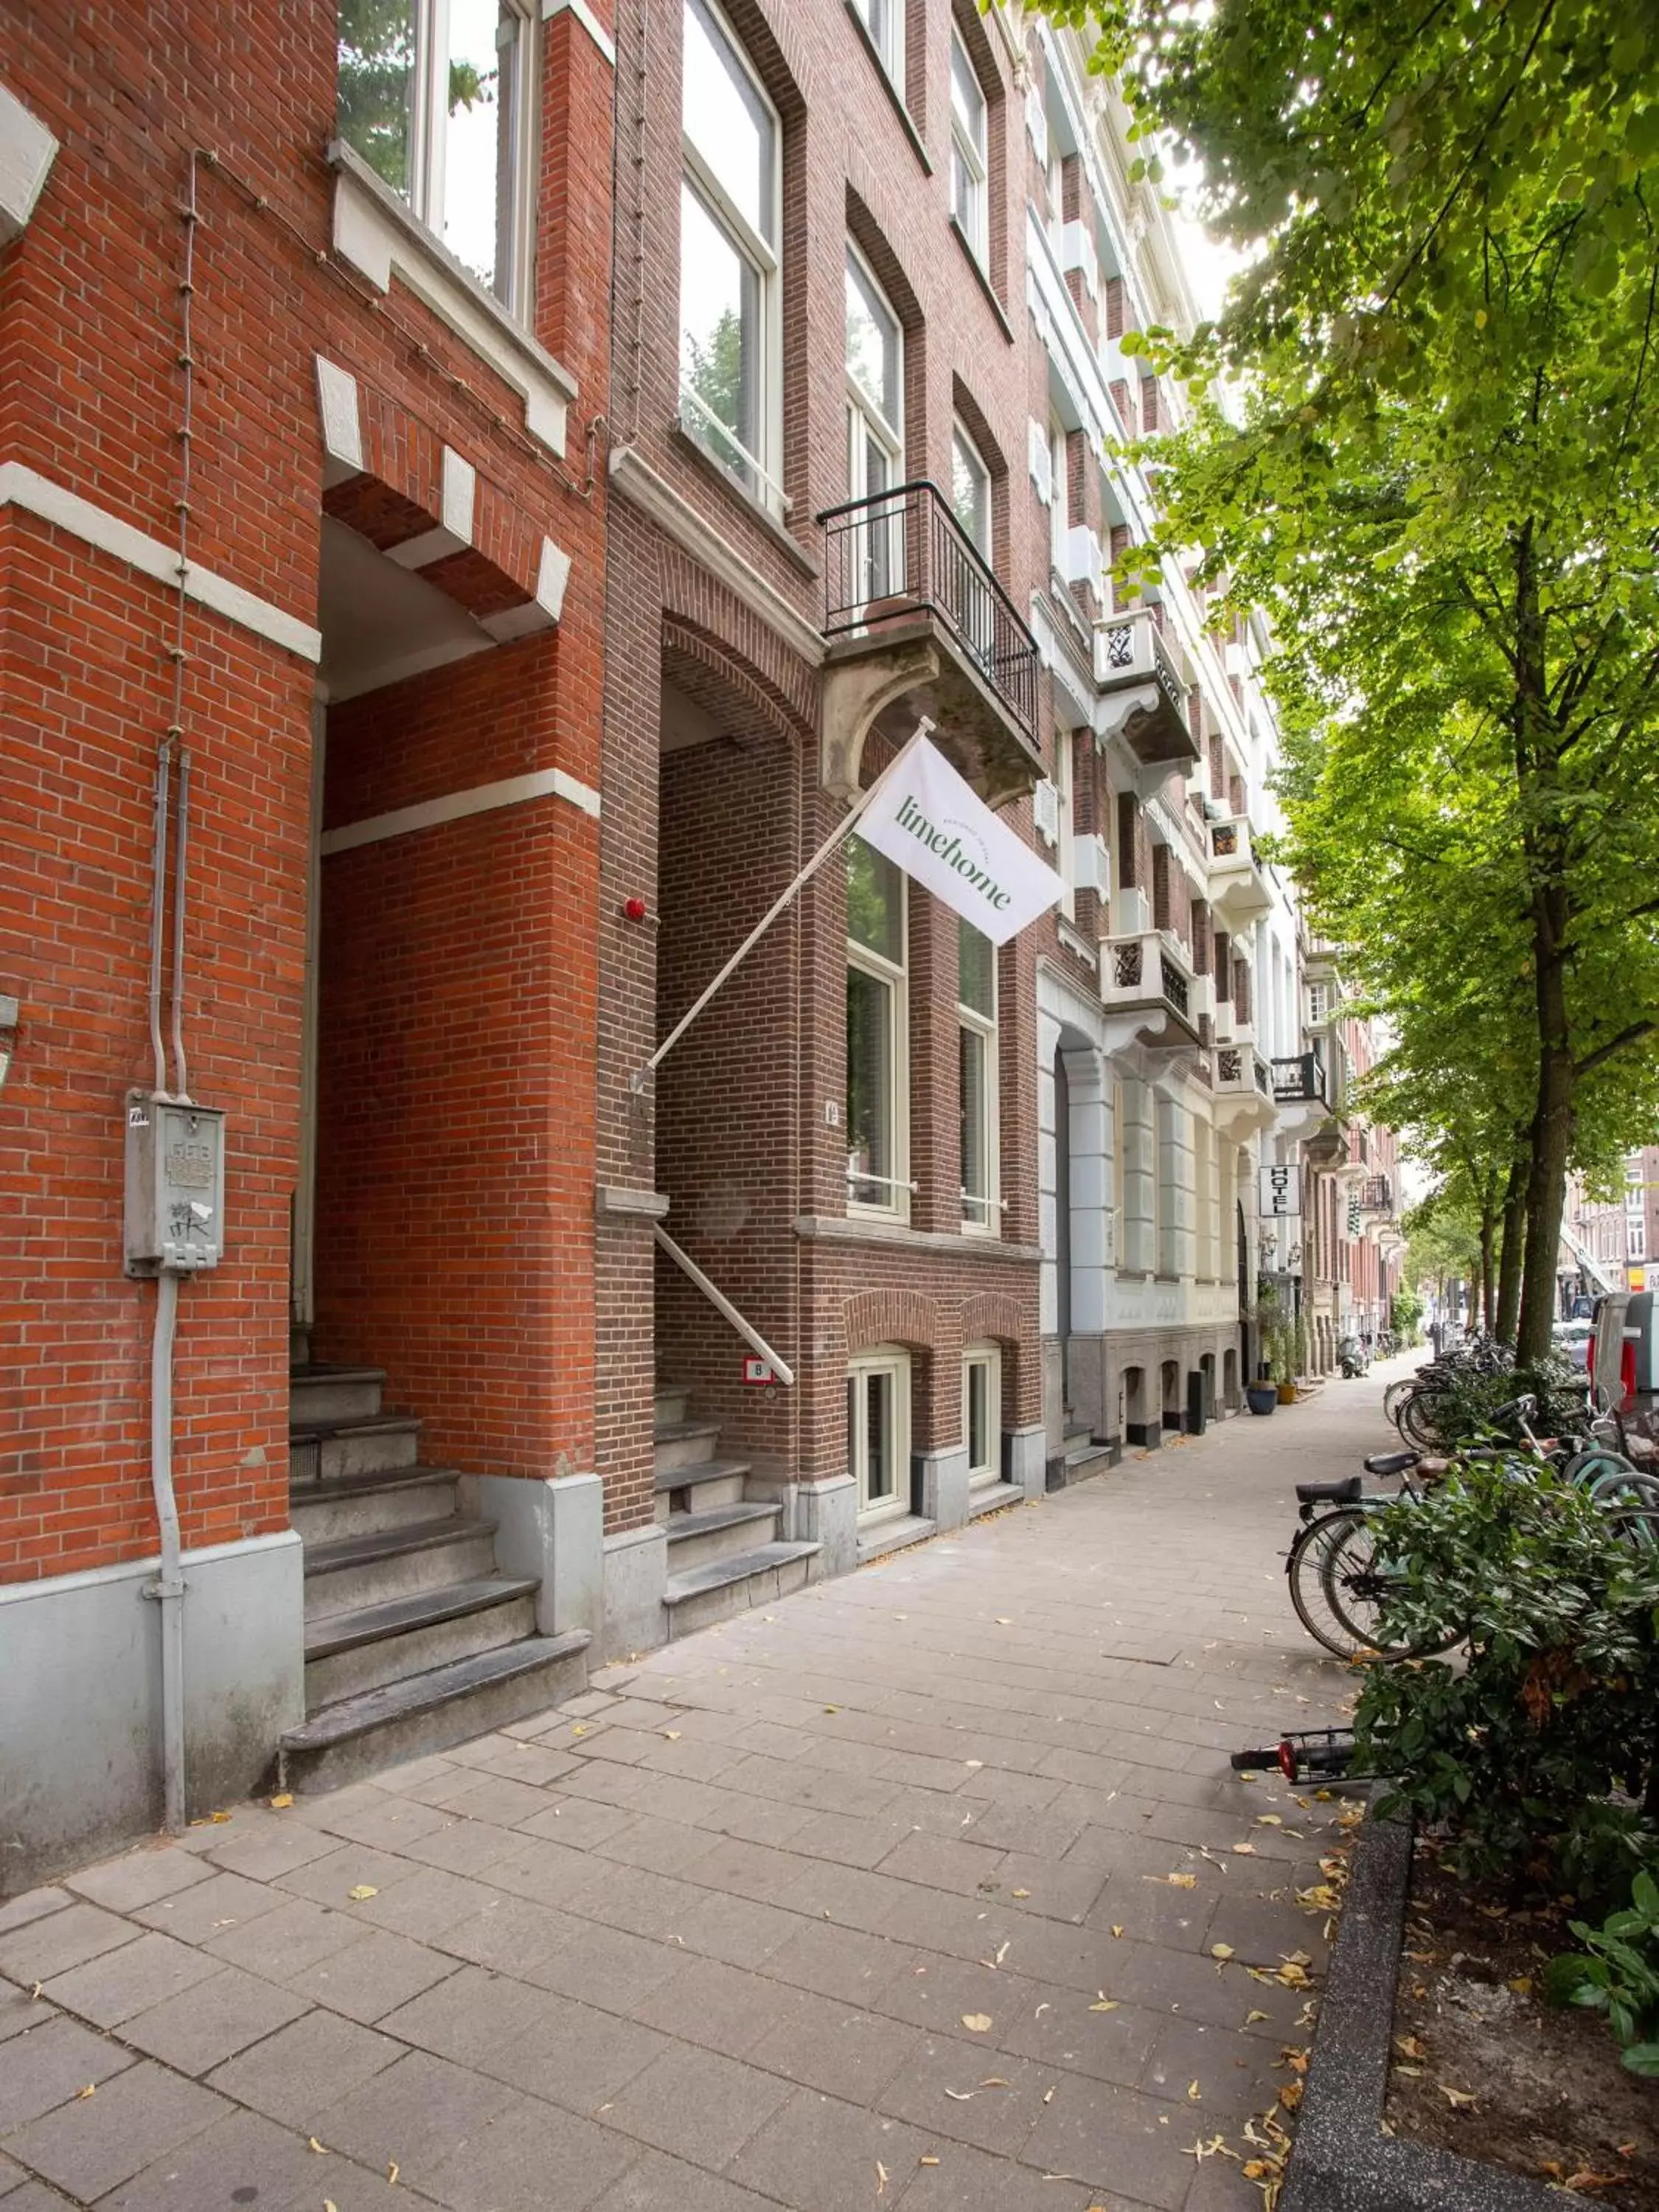 Facade/entrance in limehome Amsterdam Hemonystraat - Digital access